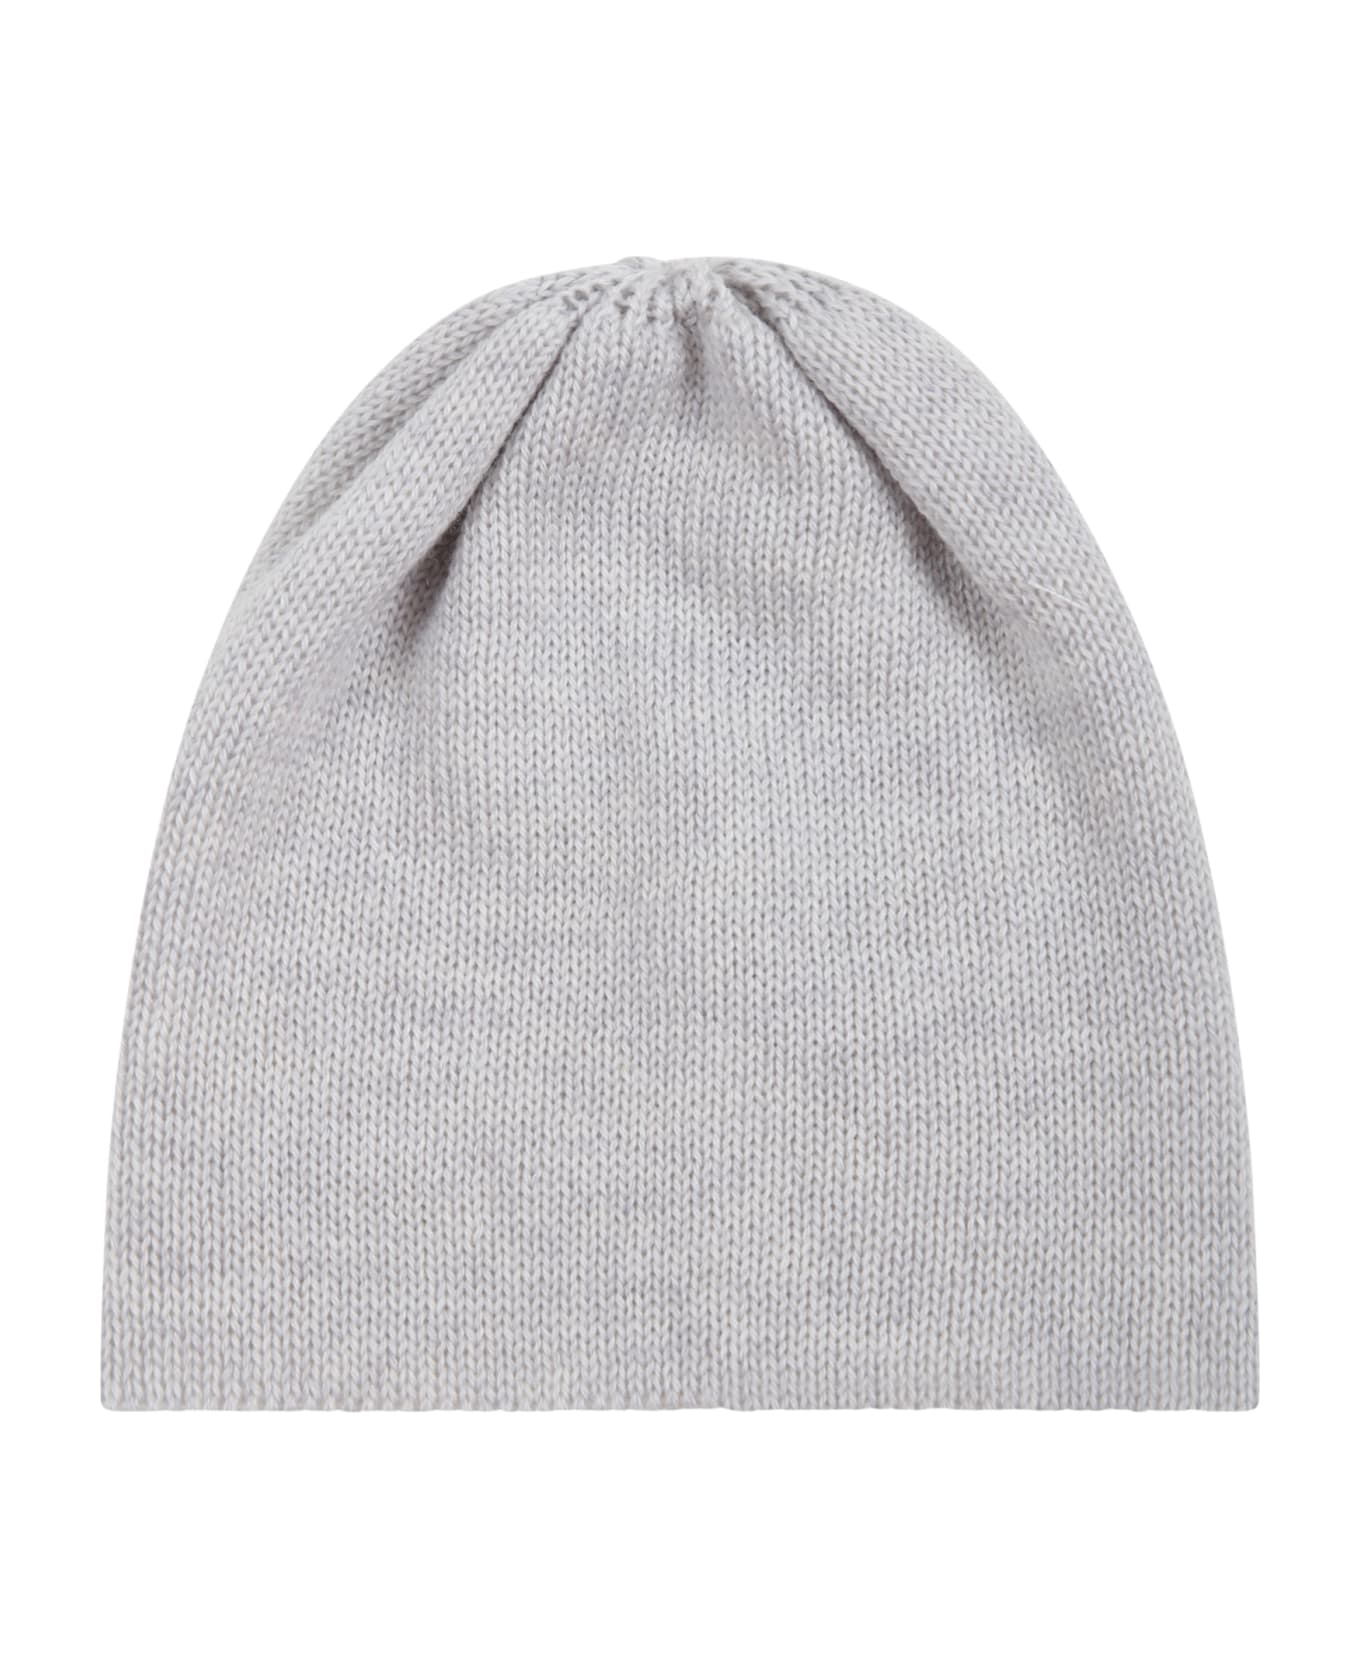 Little Bear Gray Hat For Babykids - Grey